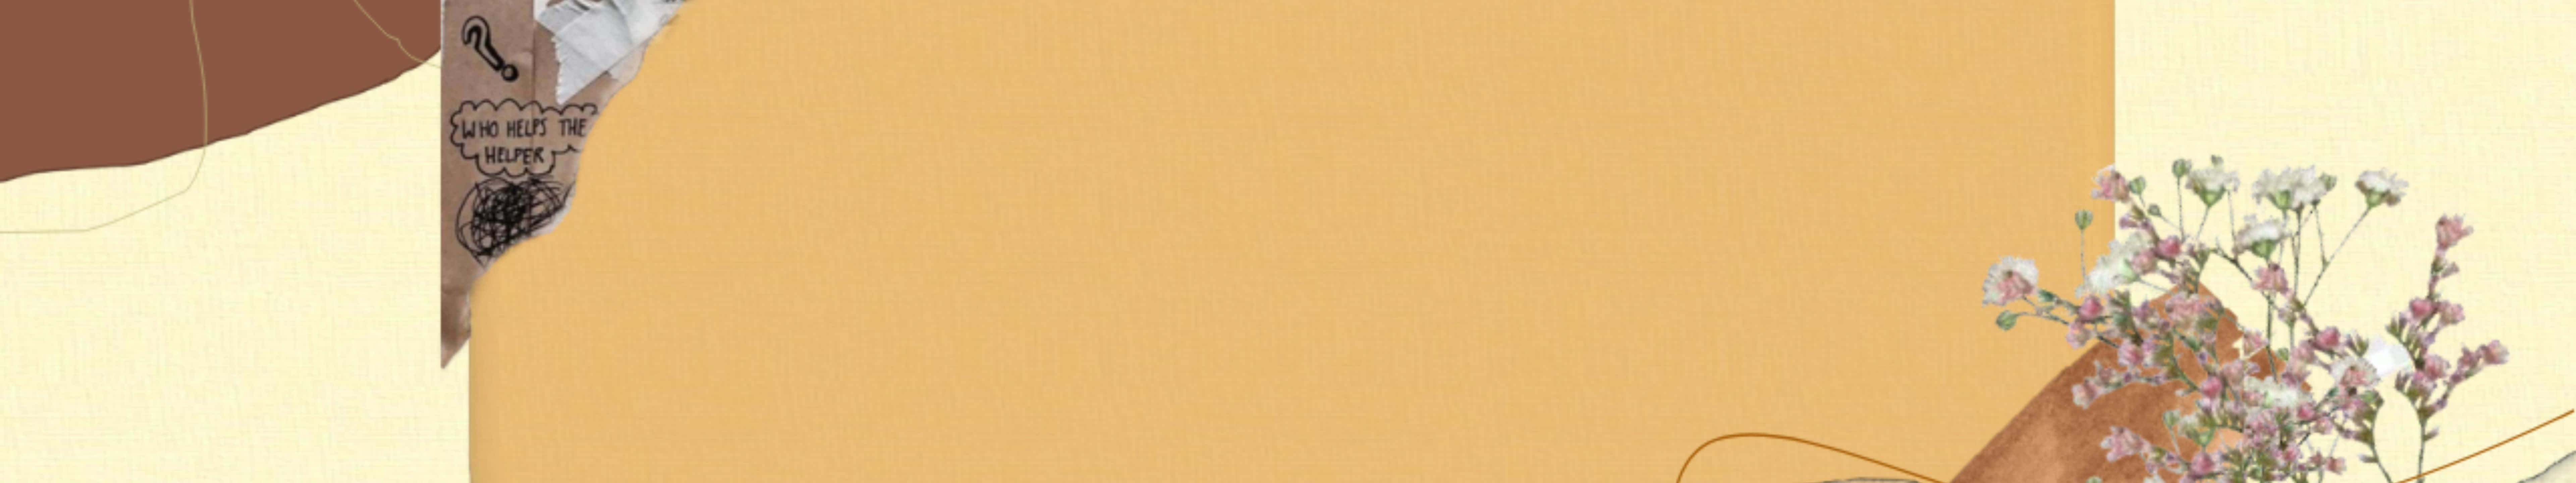 7680x 1440 Breitbild Pastell Wallpaper